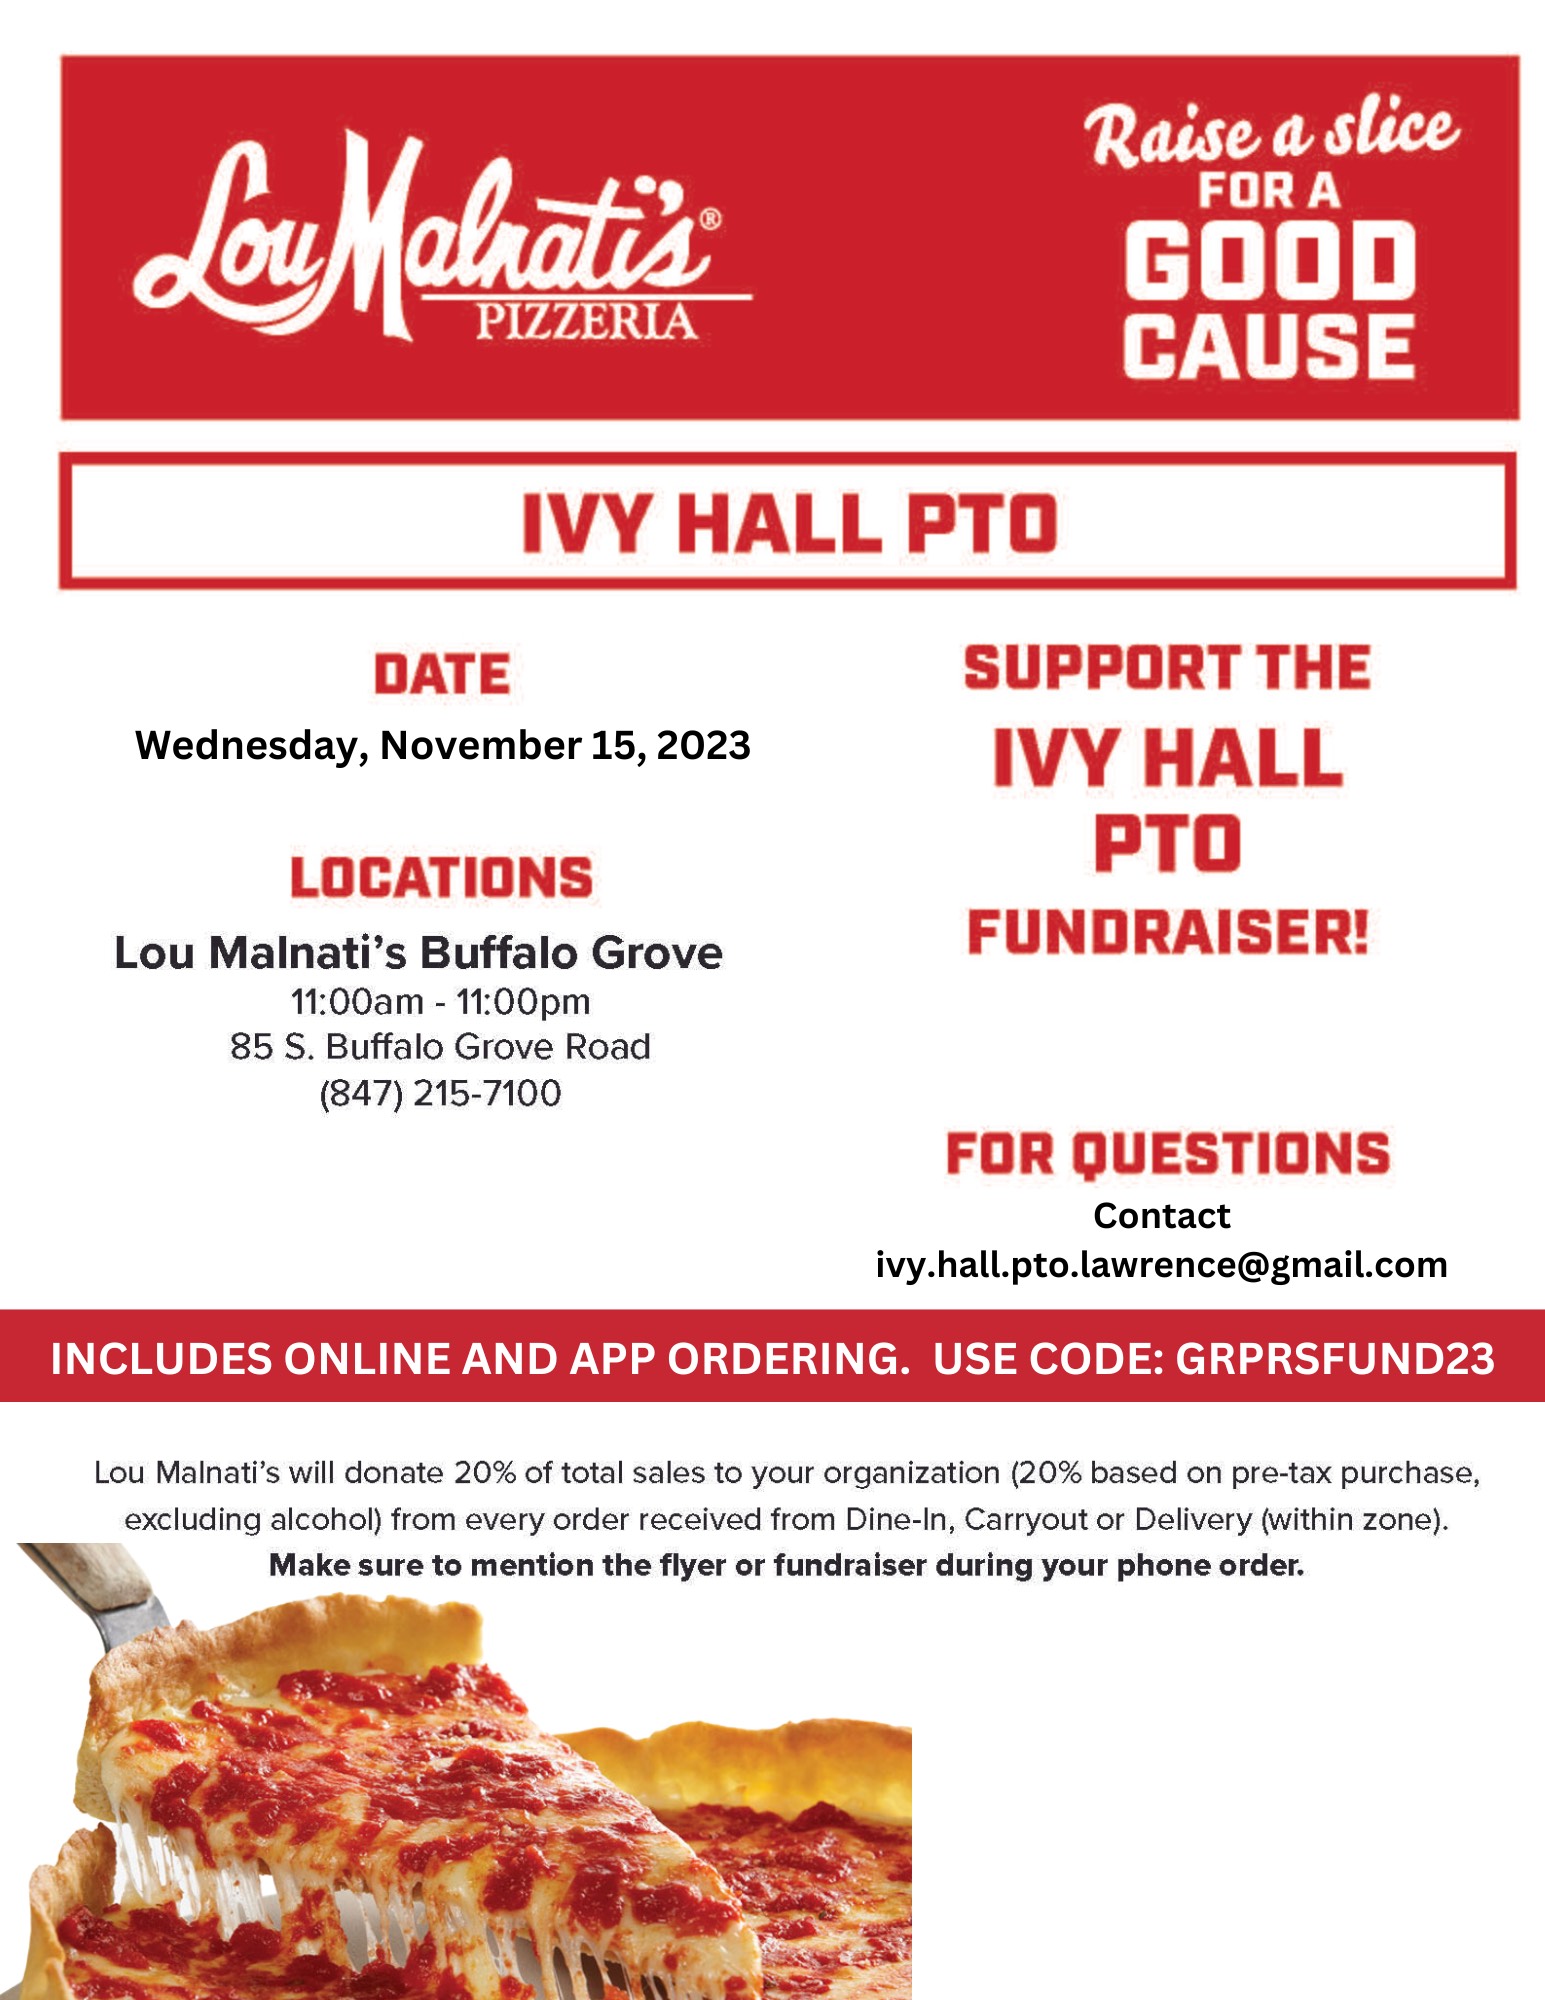 Ivy Hall PTO Fundraiser at Lou Malnati's Pizza on November 15, 2023